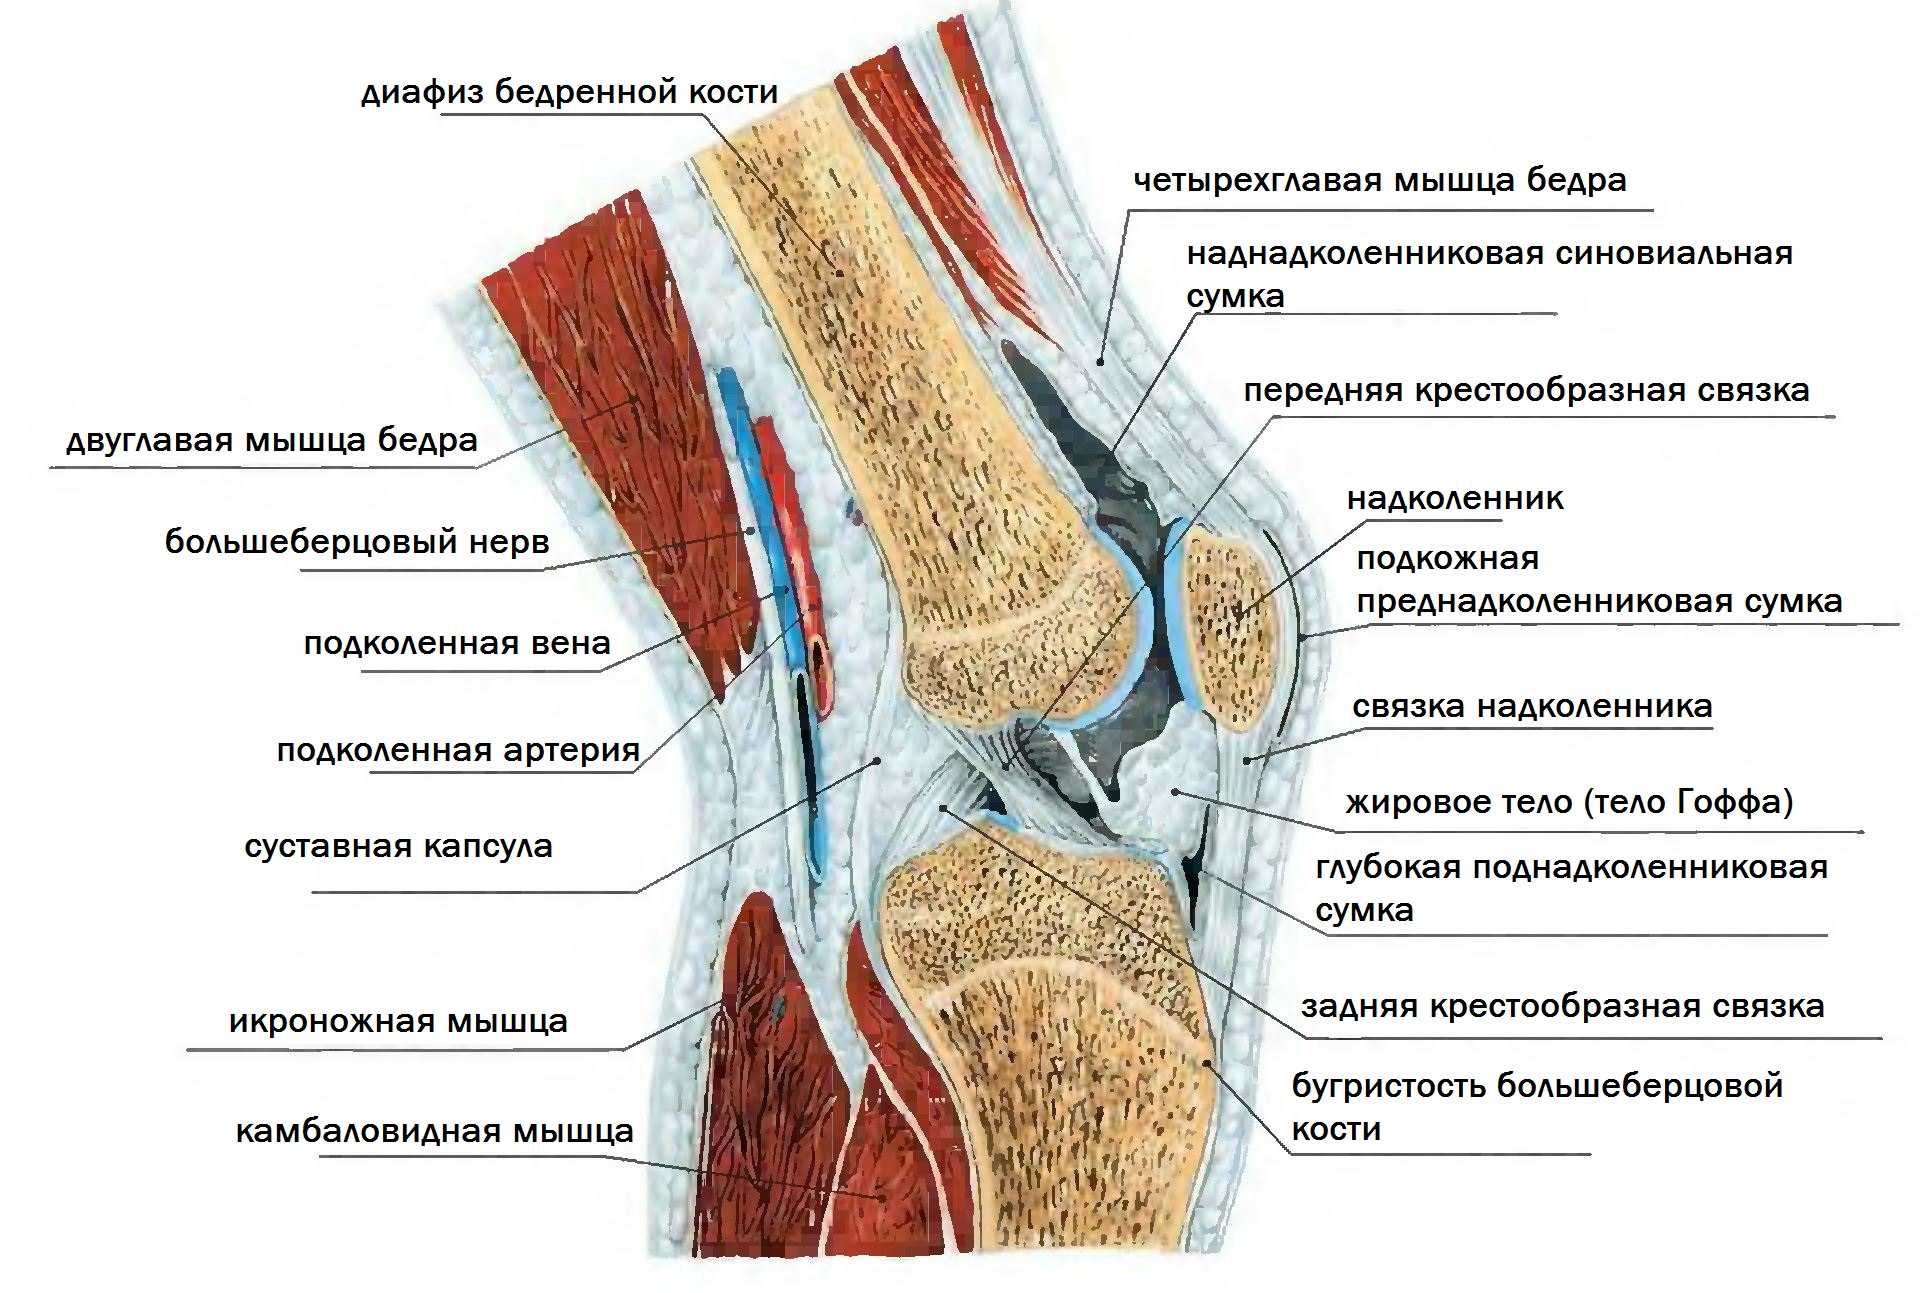 Колено строение анатомия фото с названиями и описанием